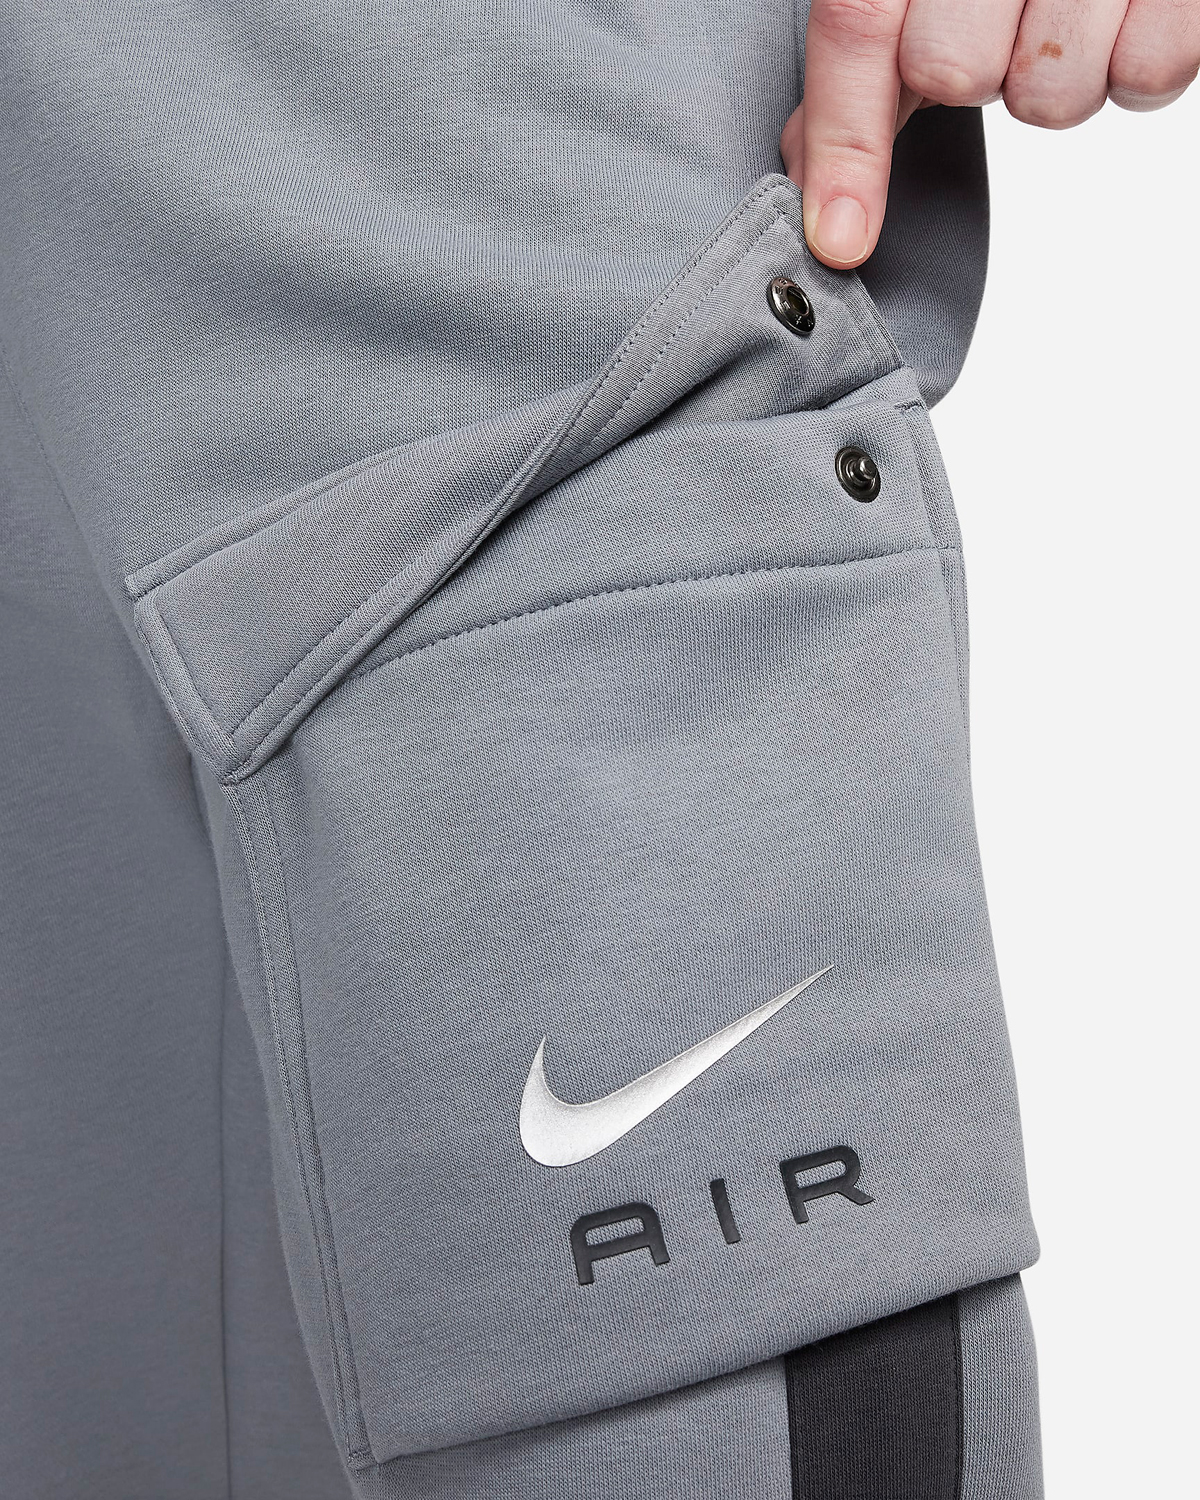 Nike-Air-Fleece-Cargo-Pants-Cool-Grey-Anthracite-2